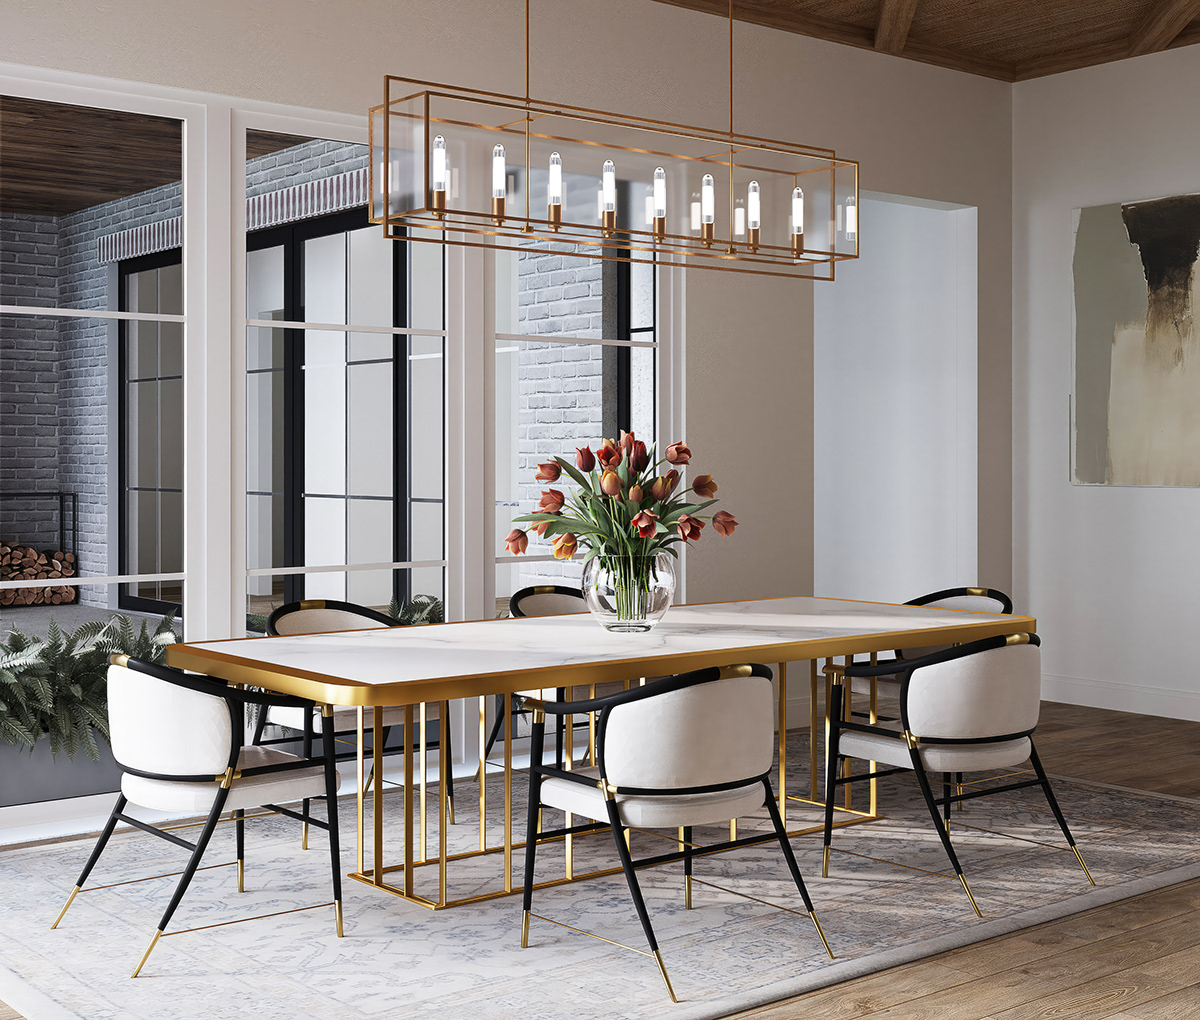 visualization рендер interior design  3ds max corona architecture modern Kitchen-dining room